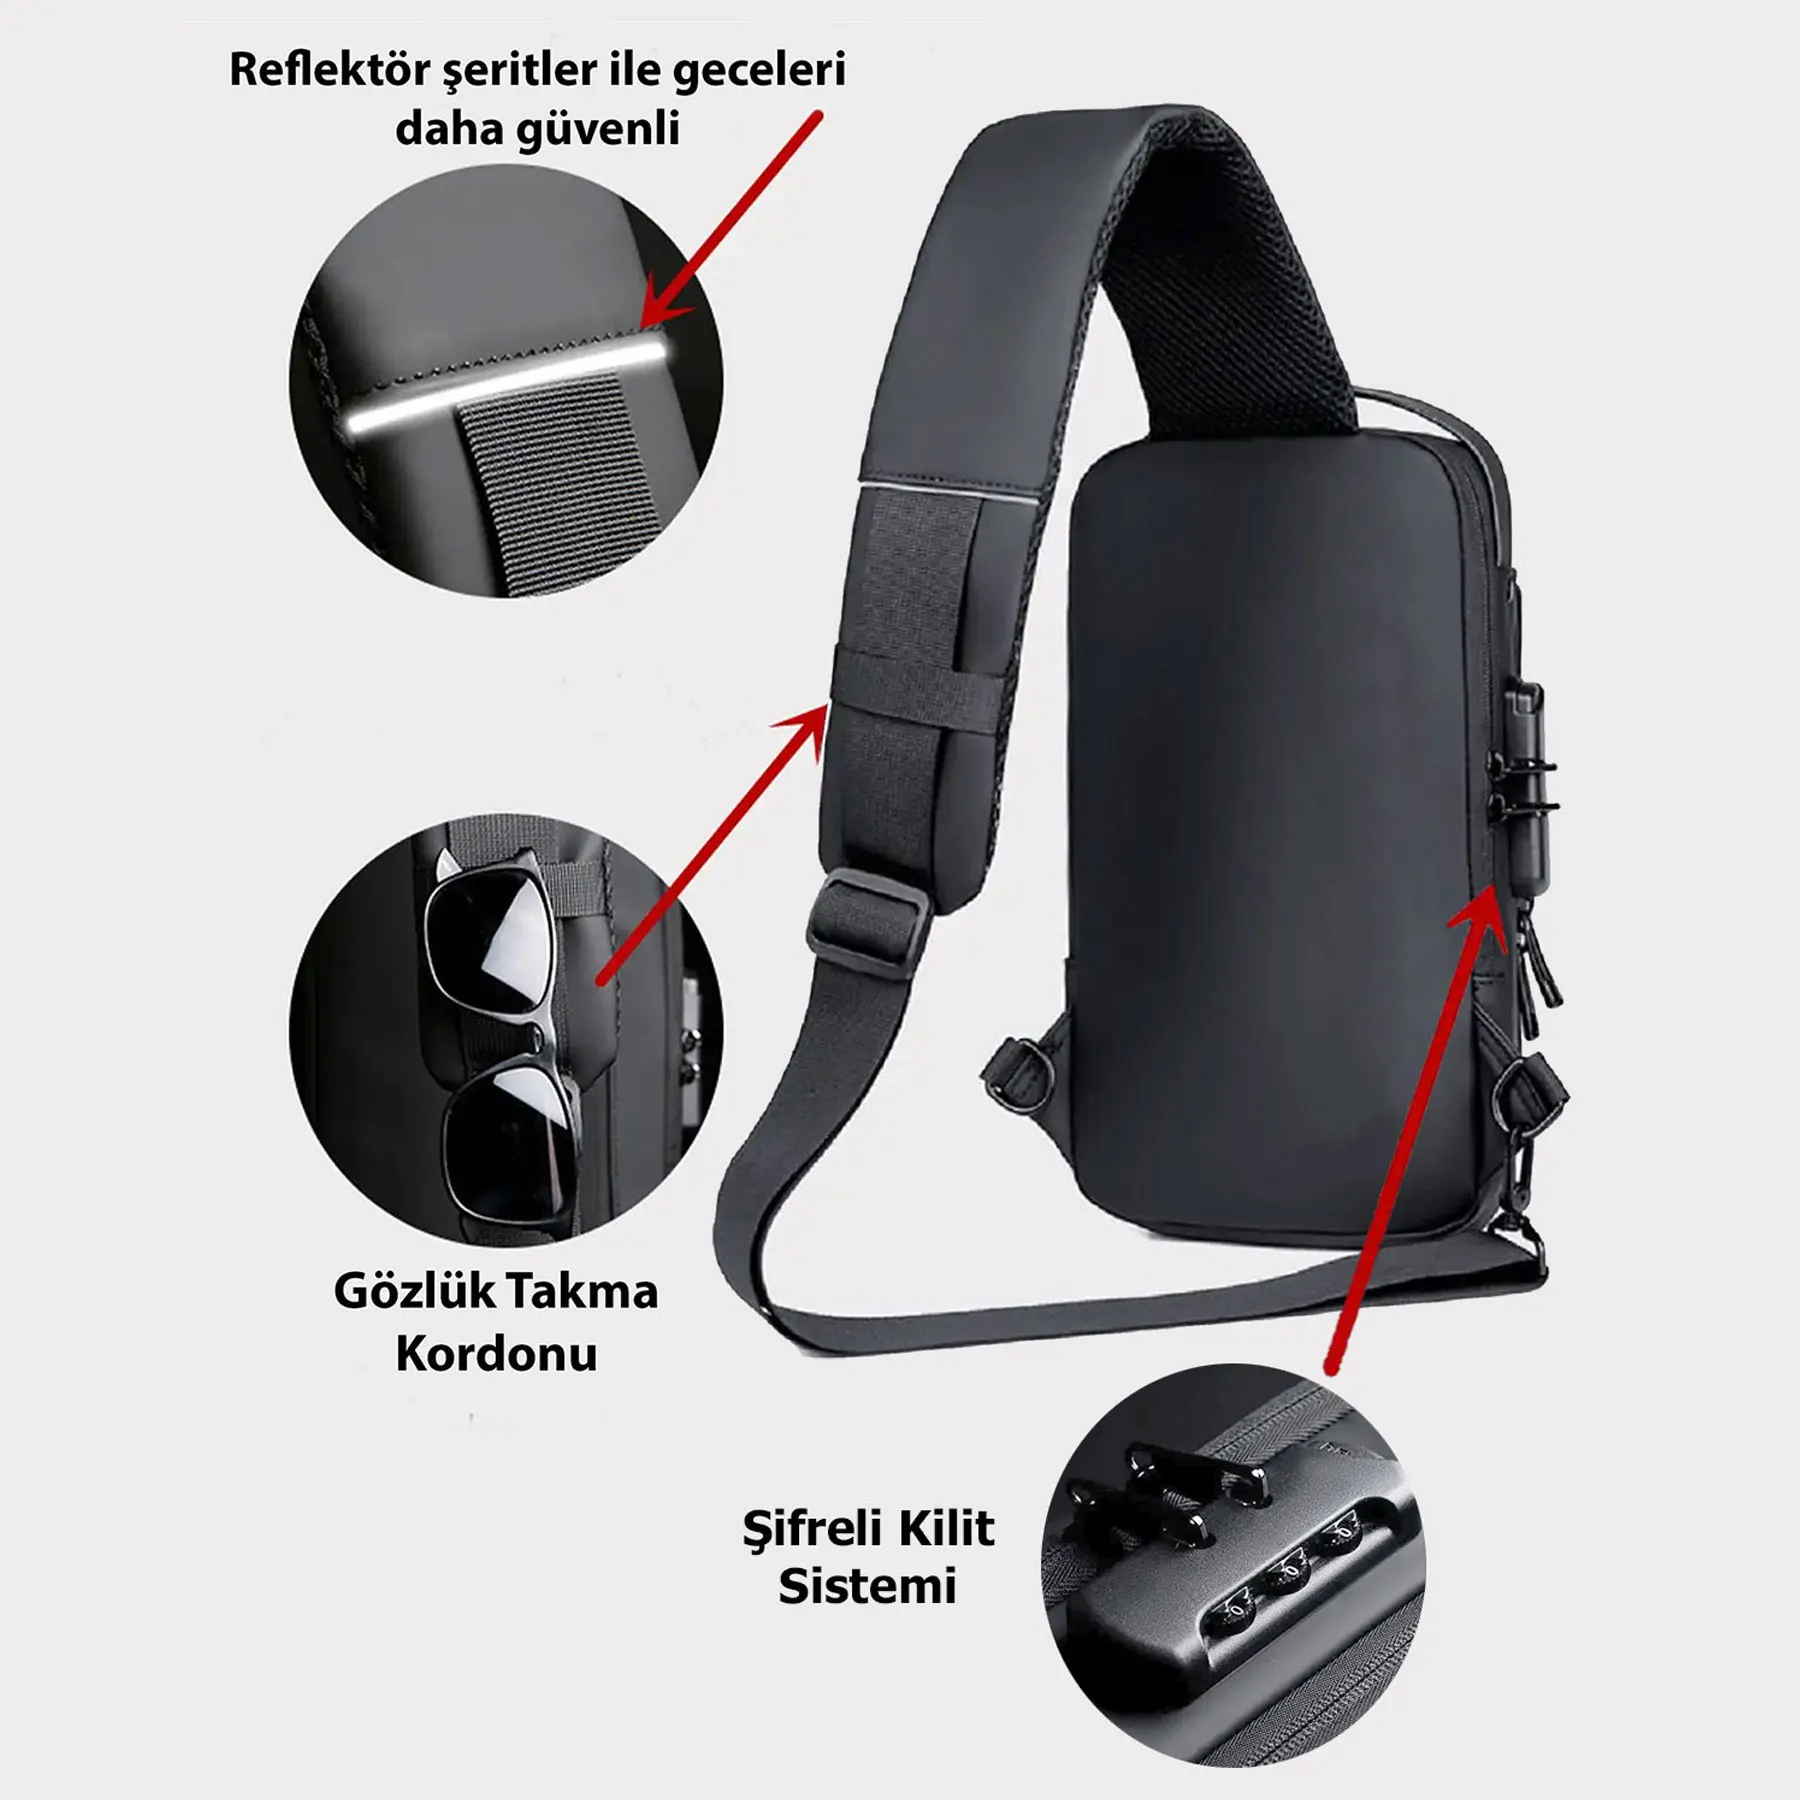 Lgarax-sacola anti-roubo à prova d'água para homens, sling bag com porta de carregamento USB, bolsa de ombro, LD468